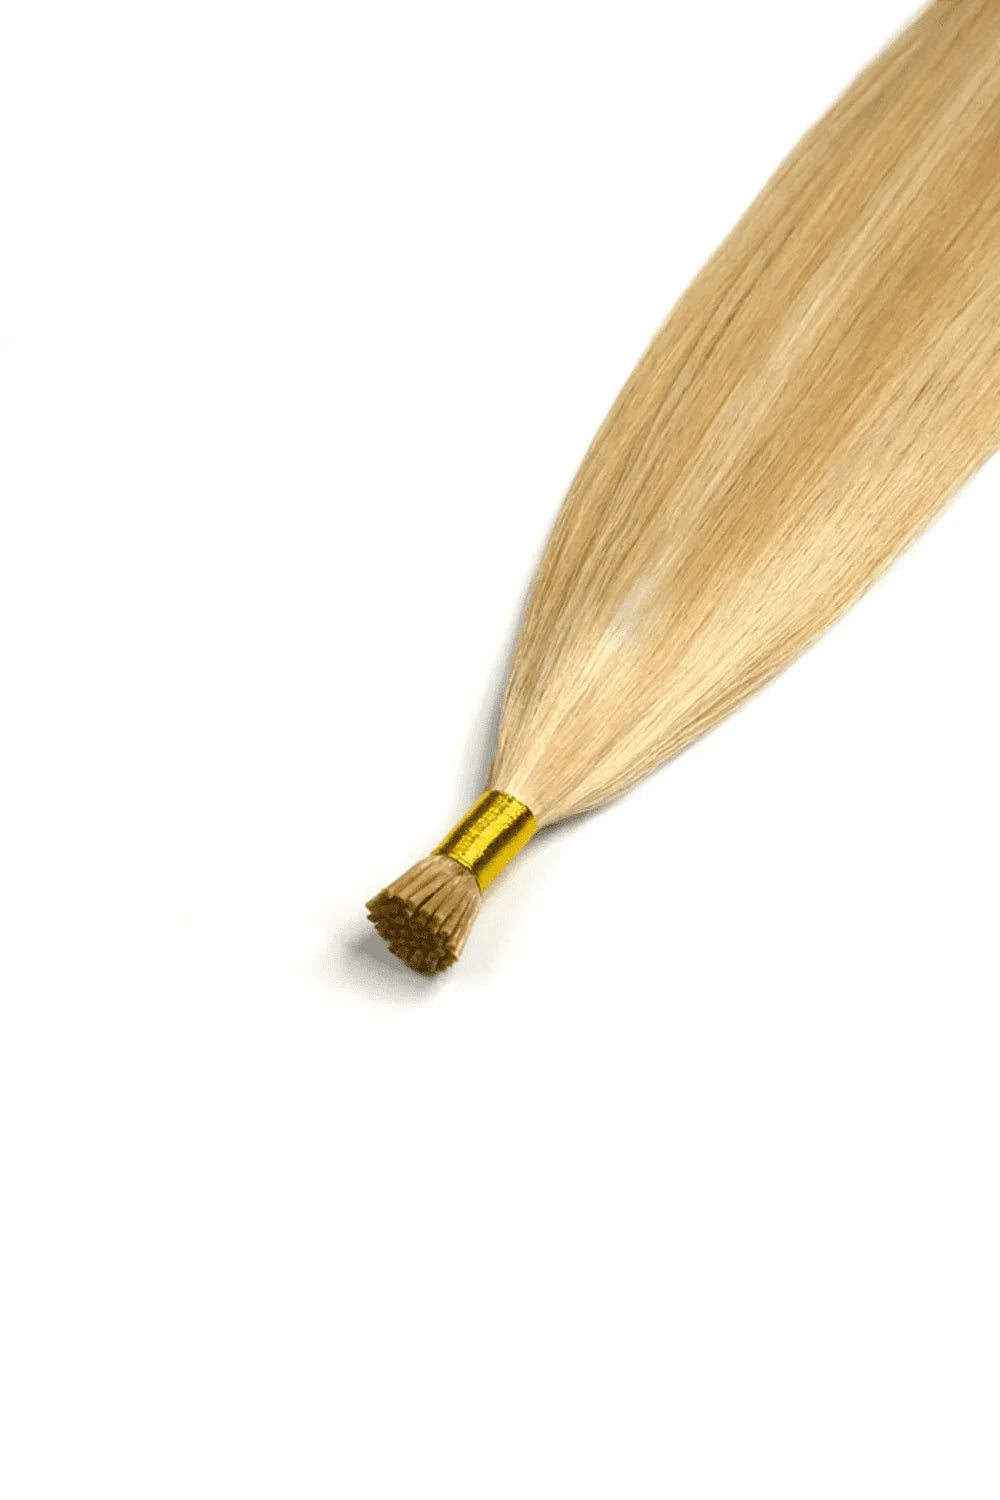 barbie blonde #16/60 remy royale i-tip hair extension